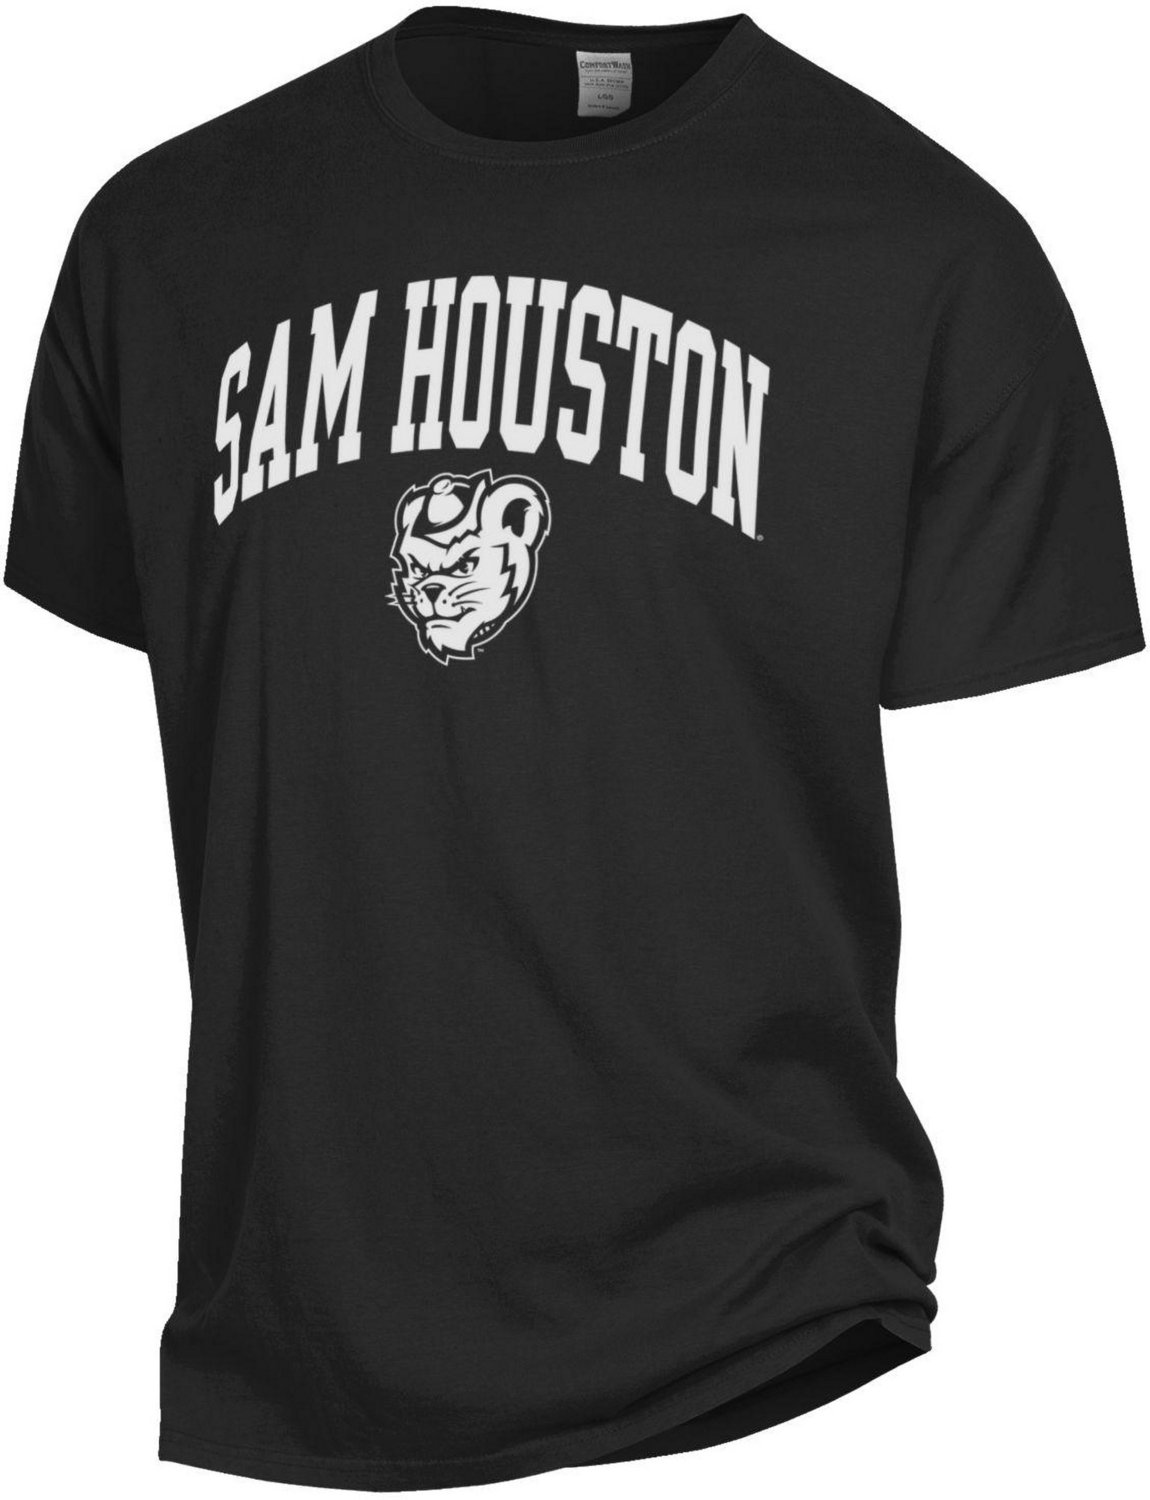 GEAR FOR SPORTS Men's Sam Houston State University Comfort Wash